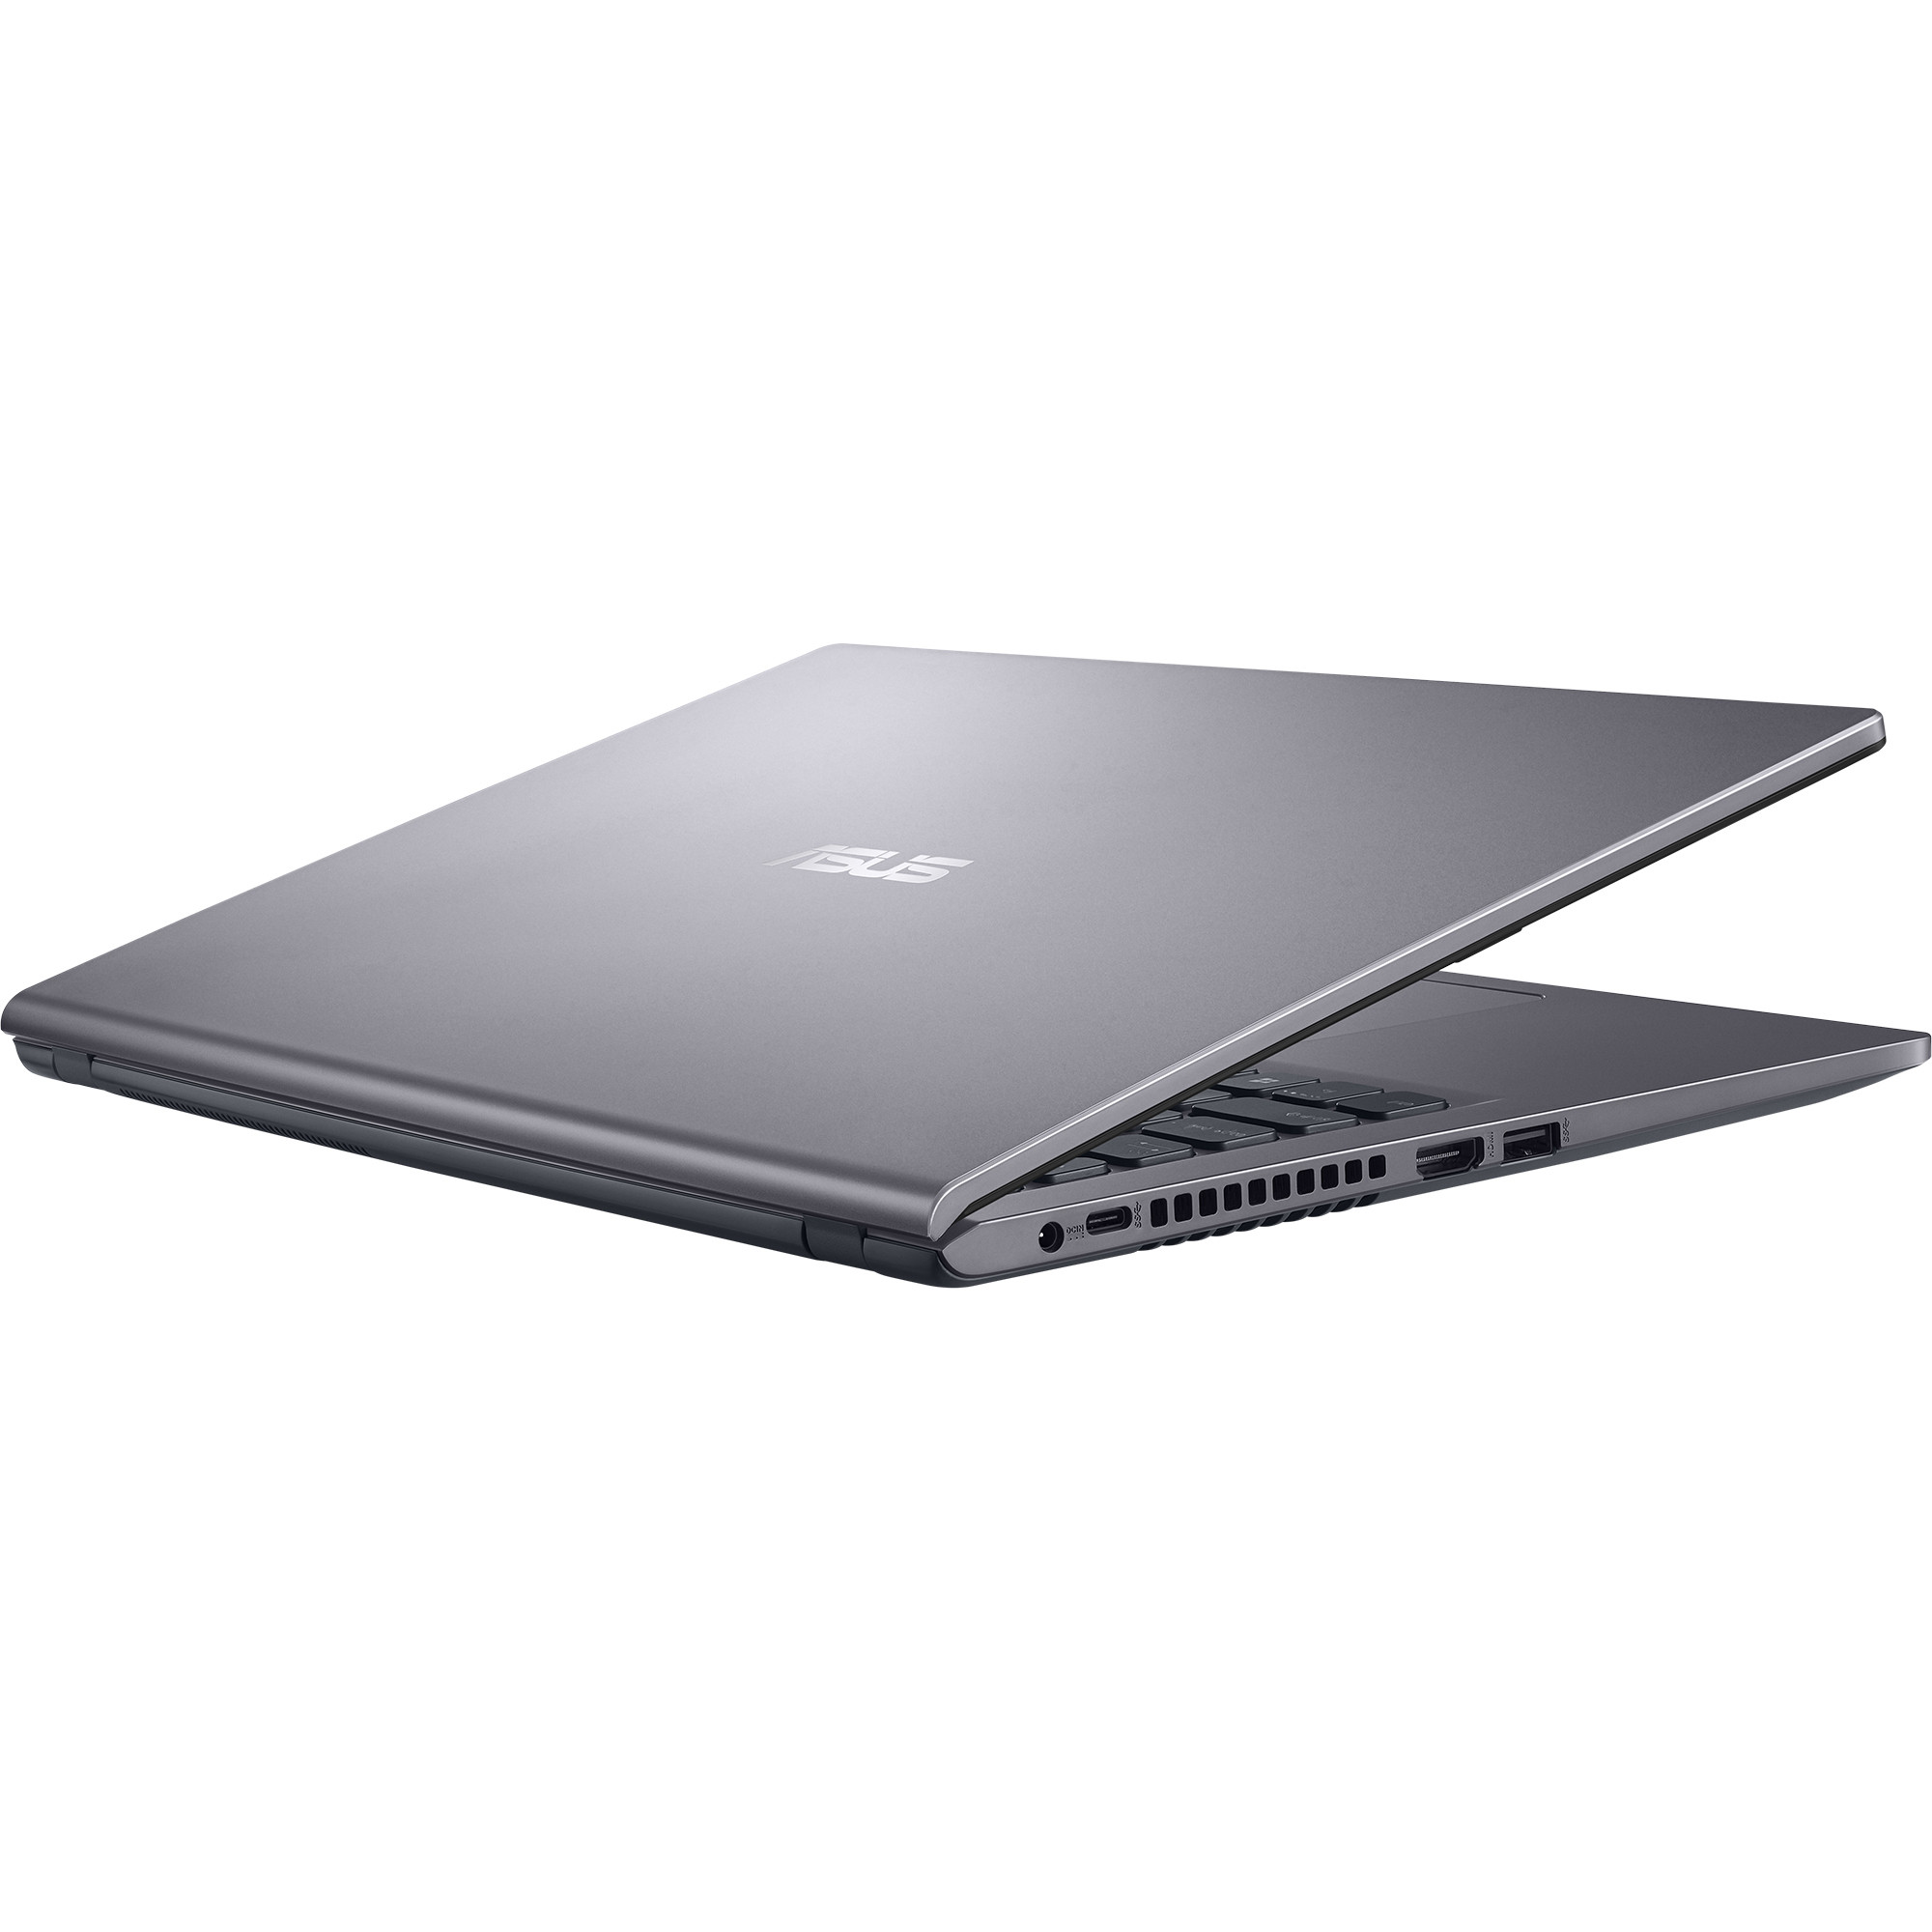 Asus VivoBook F515JA-BR097T i3-1005G1 8GB 256SSD 15.6 W10 (Polvo pantalla) Reacondicionat